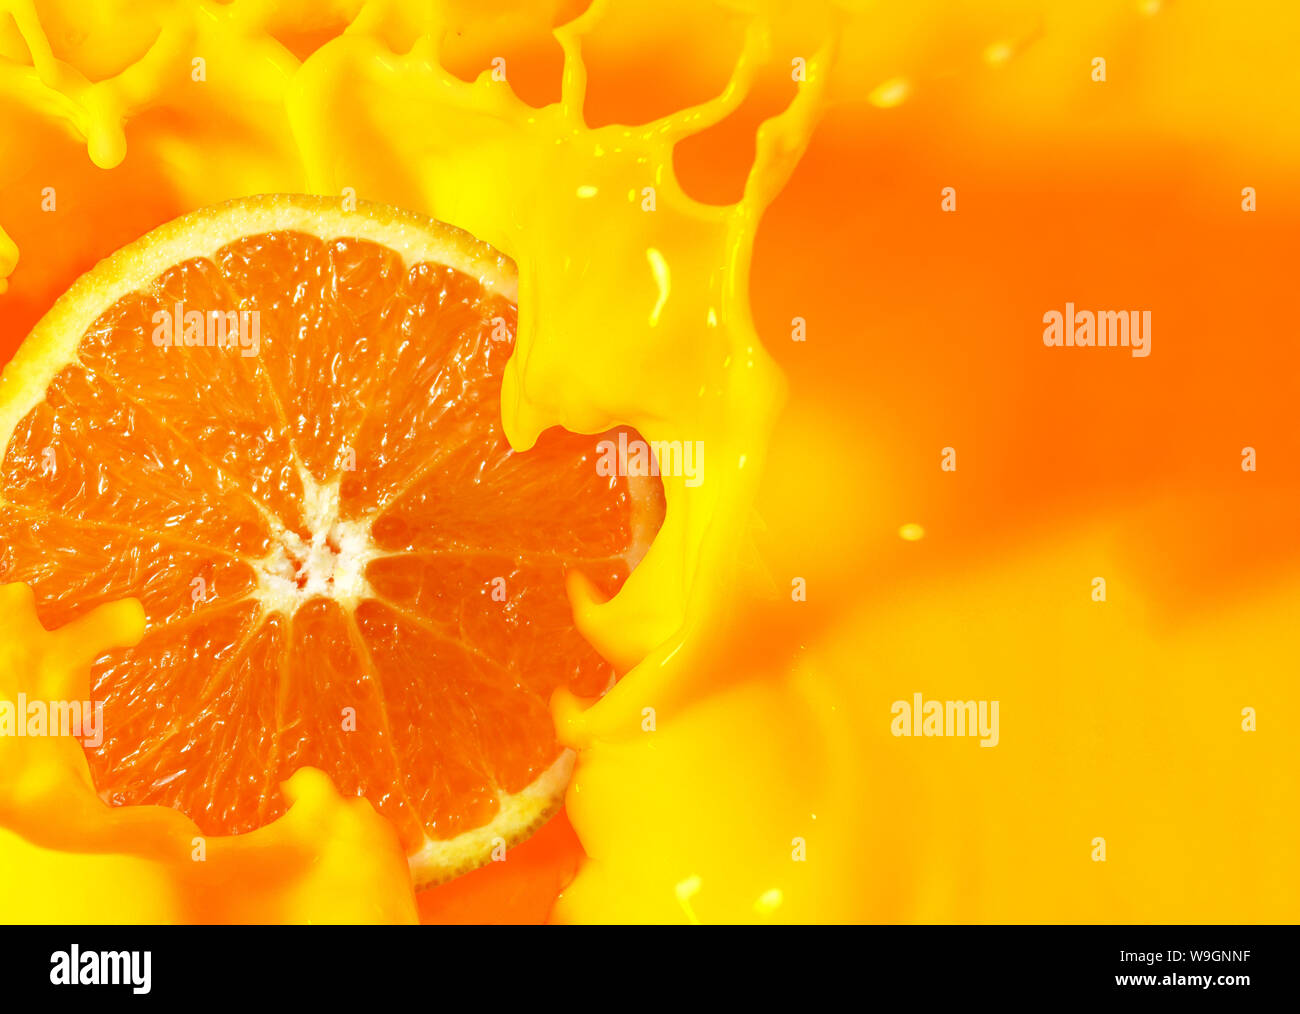 orange splash wallpaper